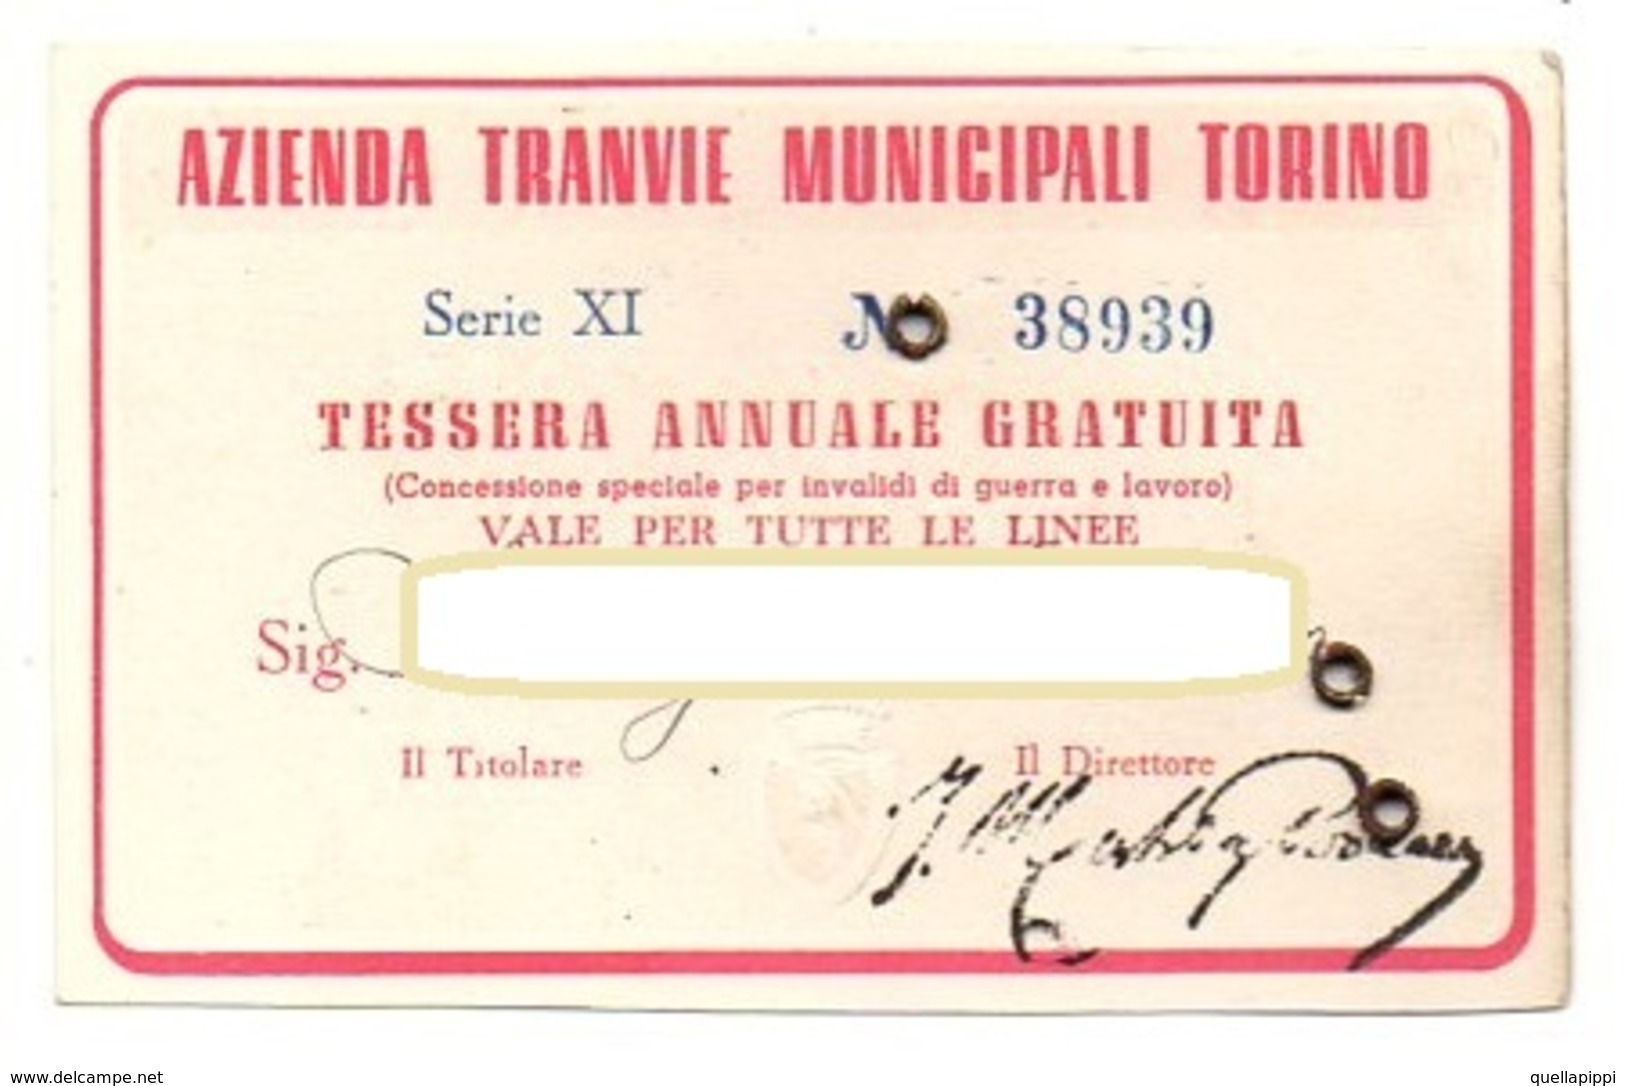 09044 "TESSERA NR. 38939 - AZIENDA TRANVIE MUNICIPALI TORINO - 1952" ORIG. - Europa